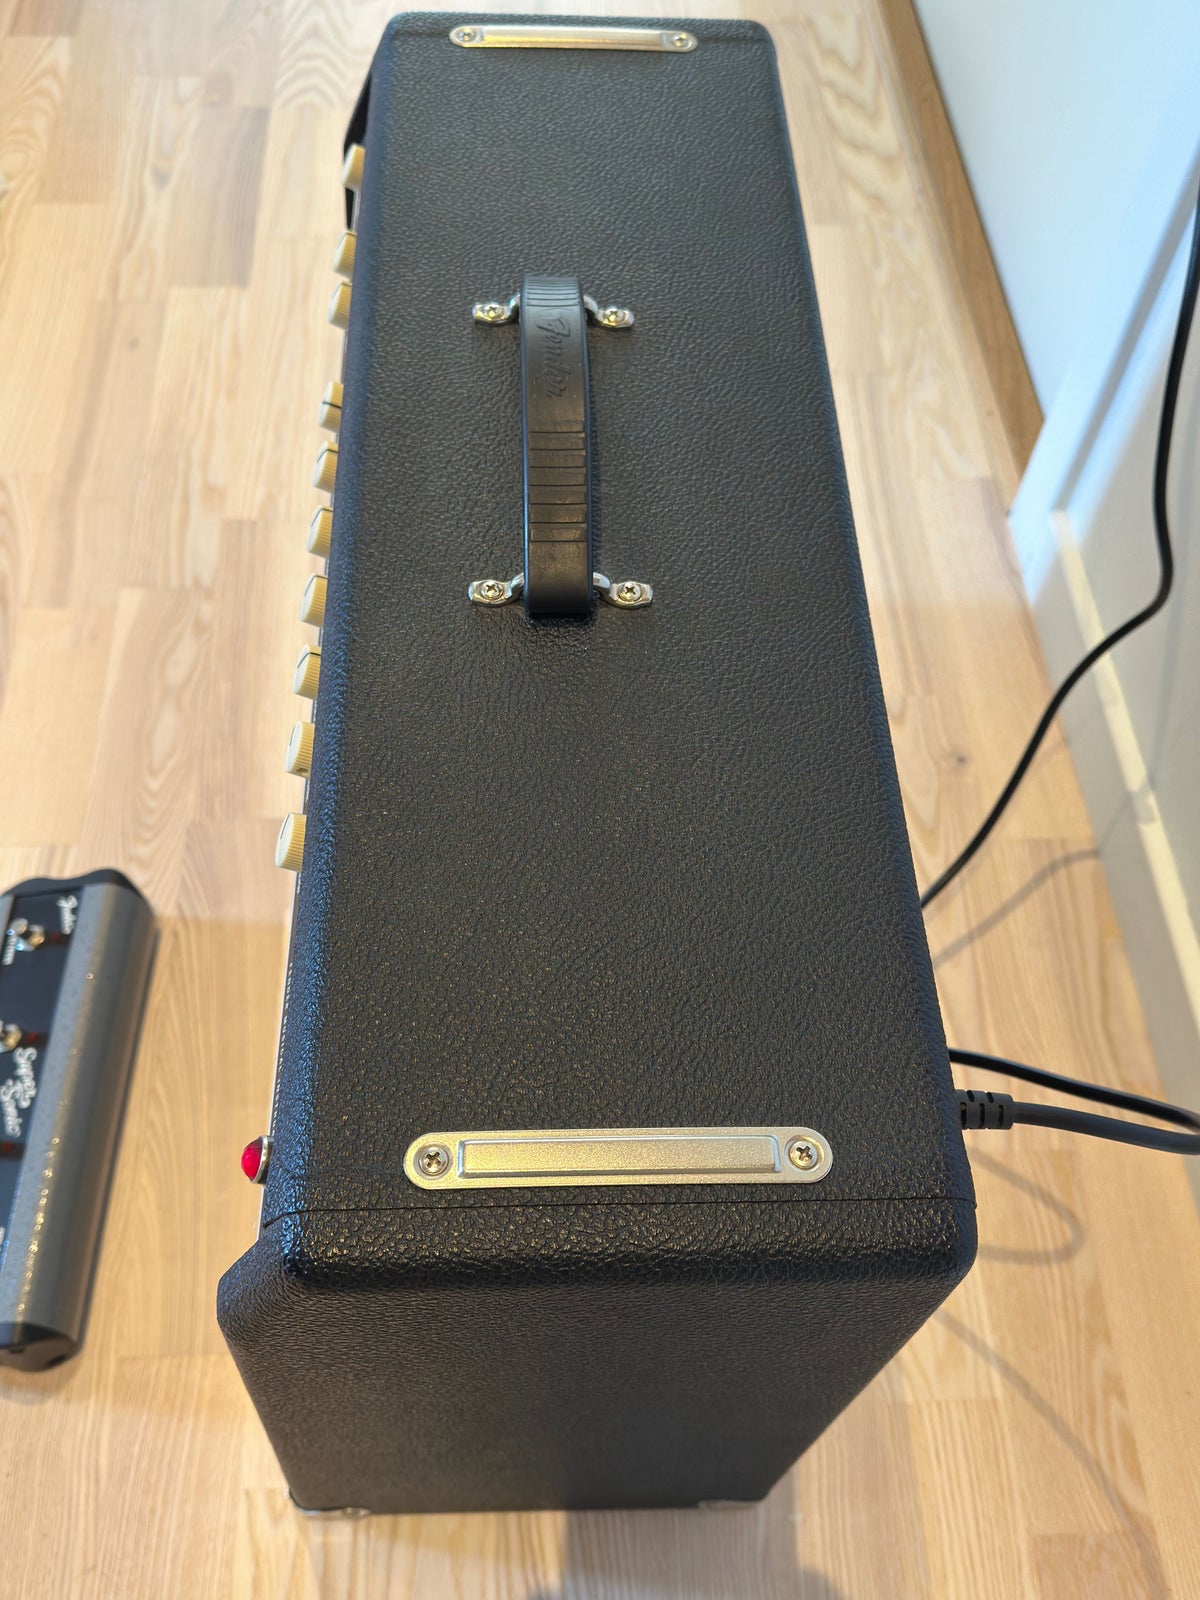 Guitarcombo, Fender Super-Sonic 22, 22 W